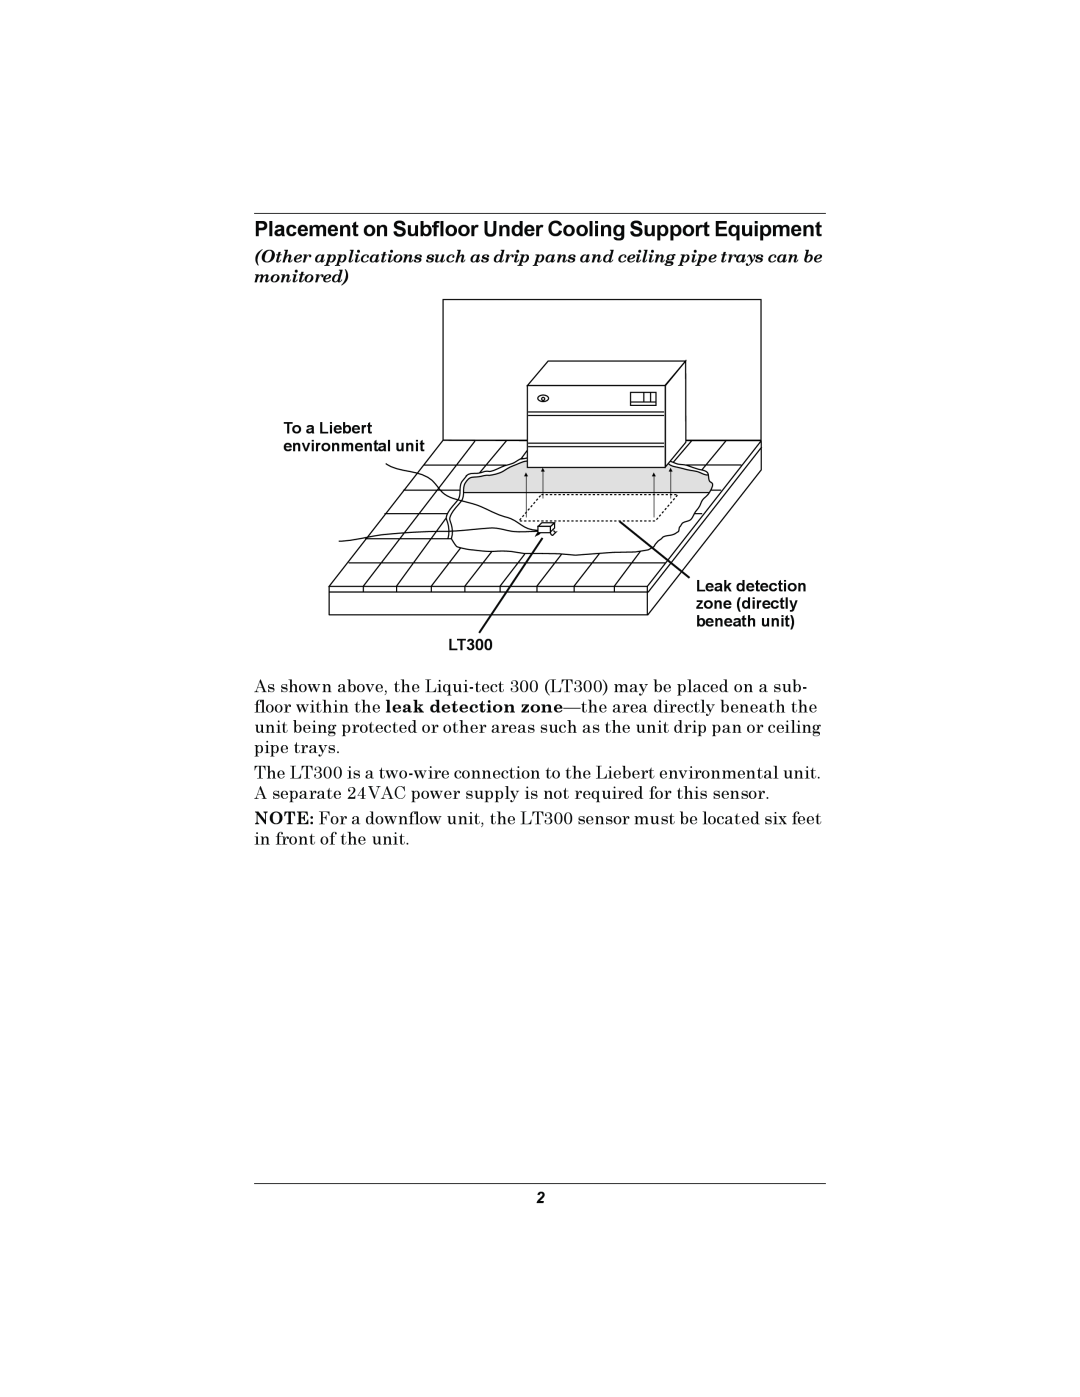 Liebert installation manual To a Liebert environmental unit, Leak detection zone directly beneath unit LT300 